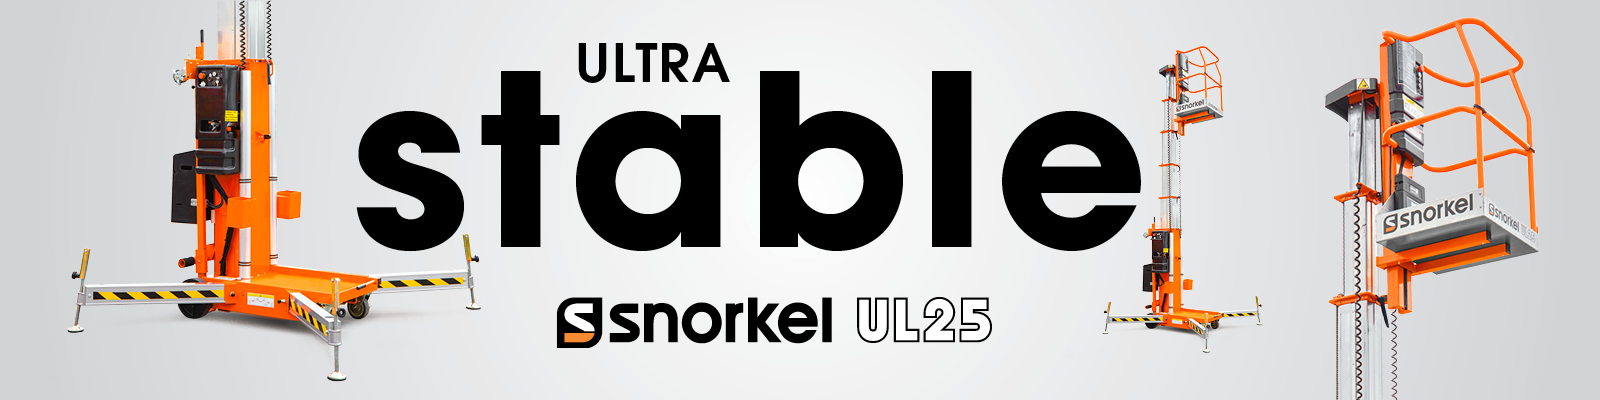 Ultra Stable - Snorkel UL25 push-around mast lift